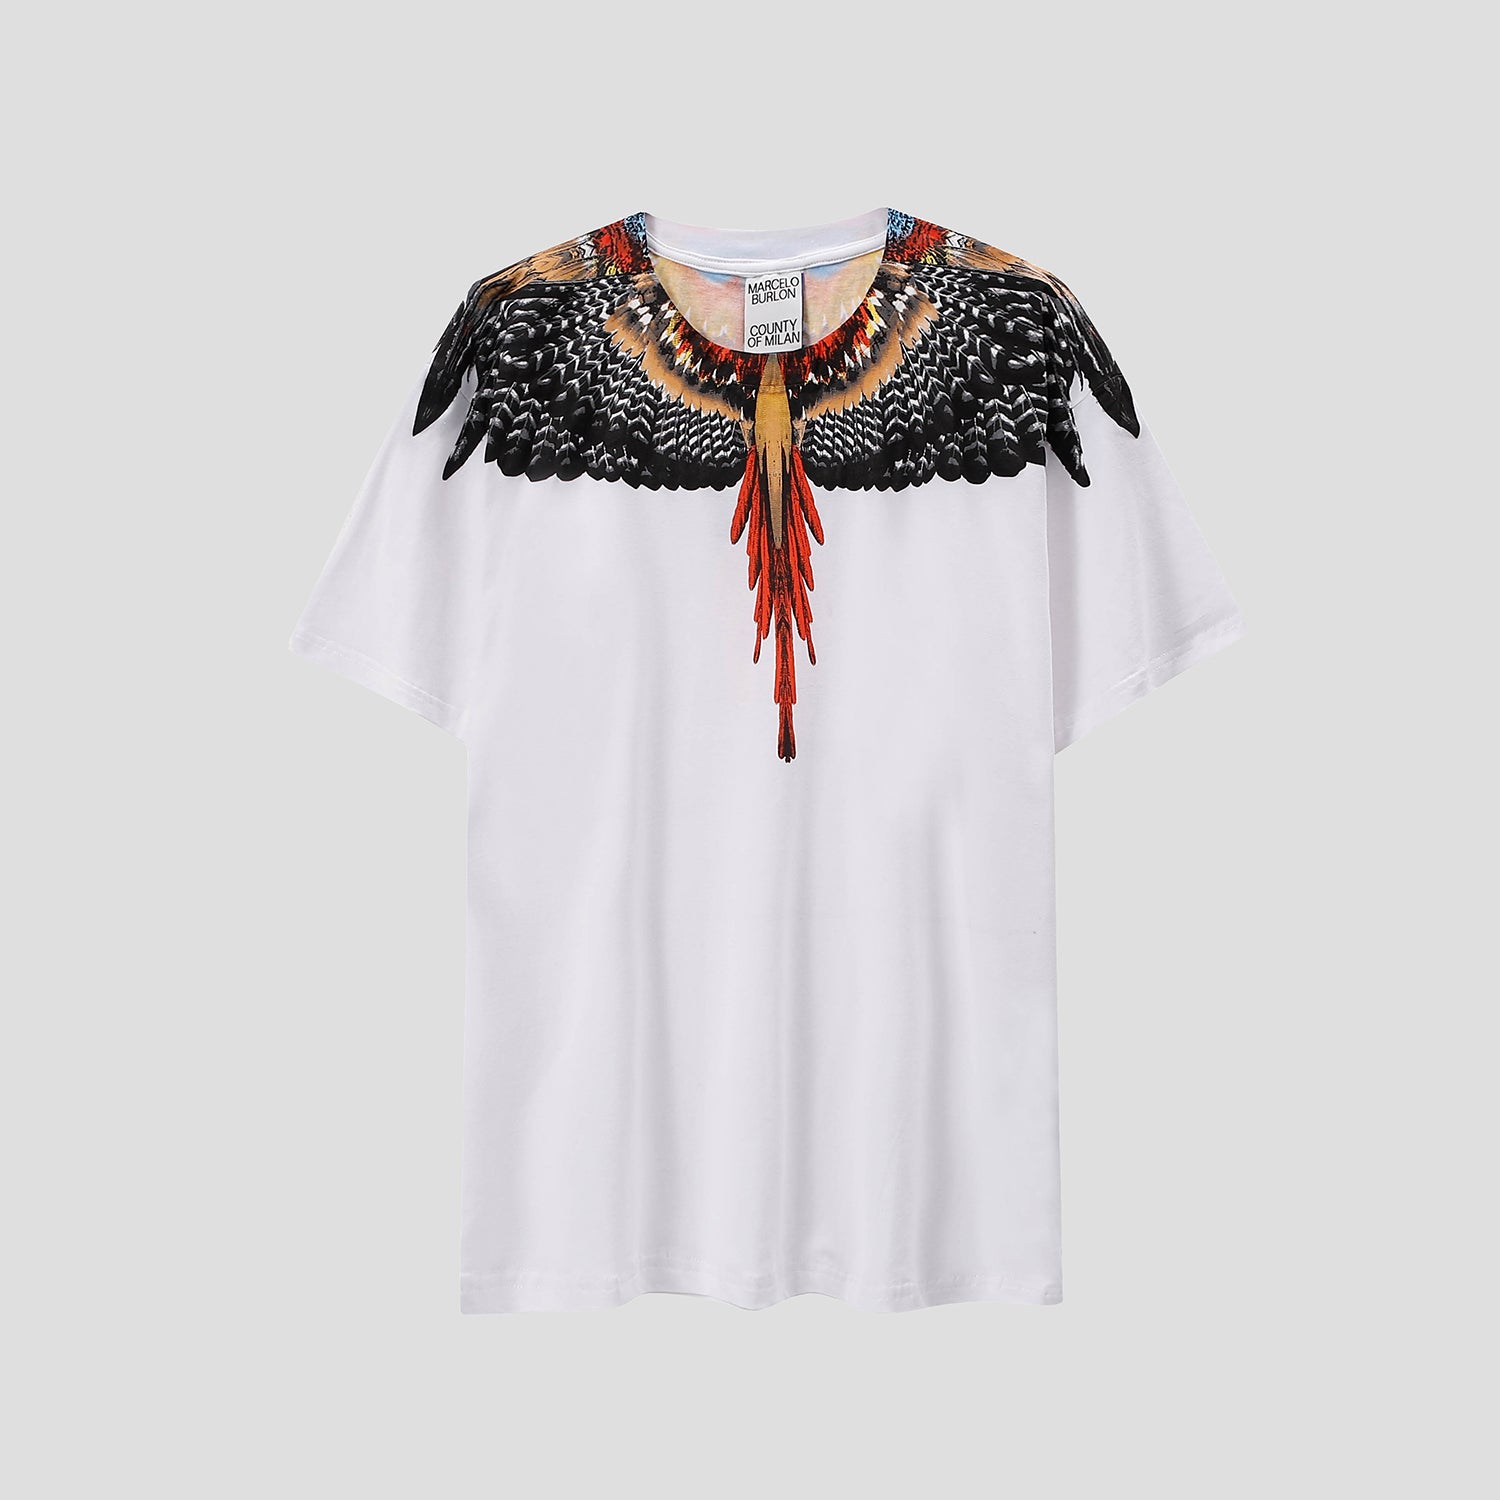 Marcelo Burlon Wings Fashion Casual Simple Men Short Sleeve T-Shirt Tops Polo shirt